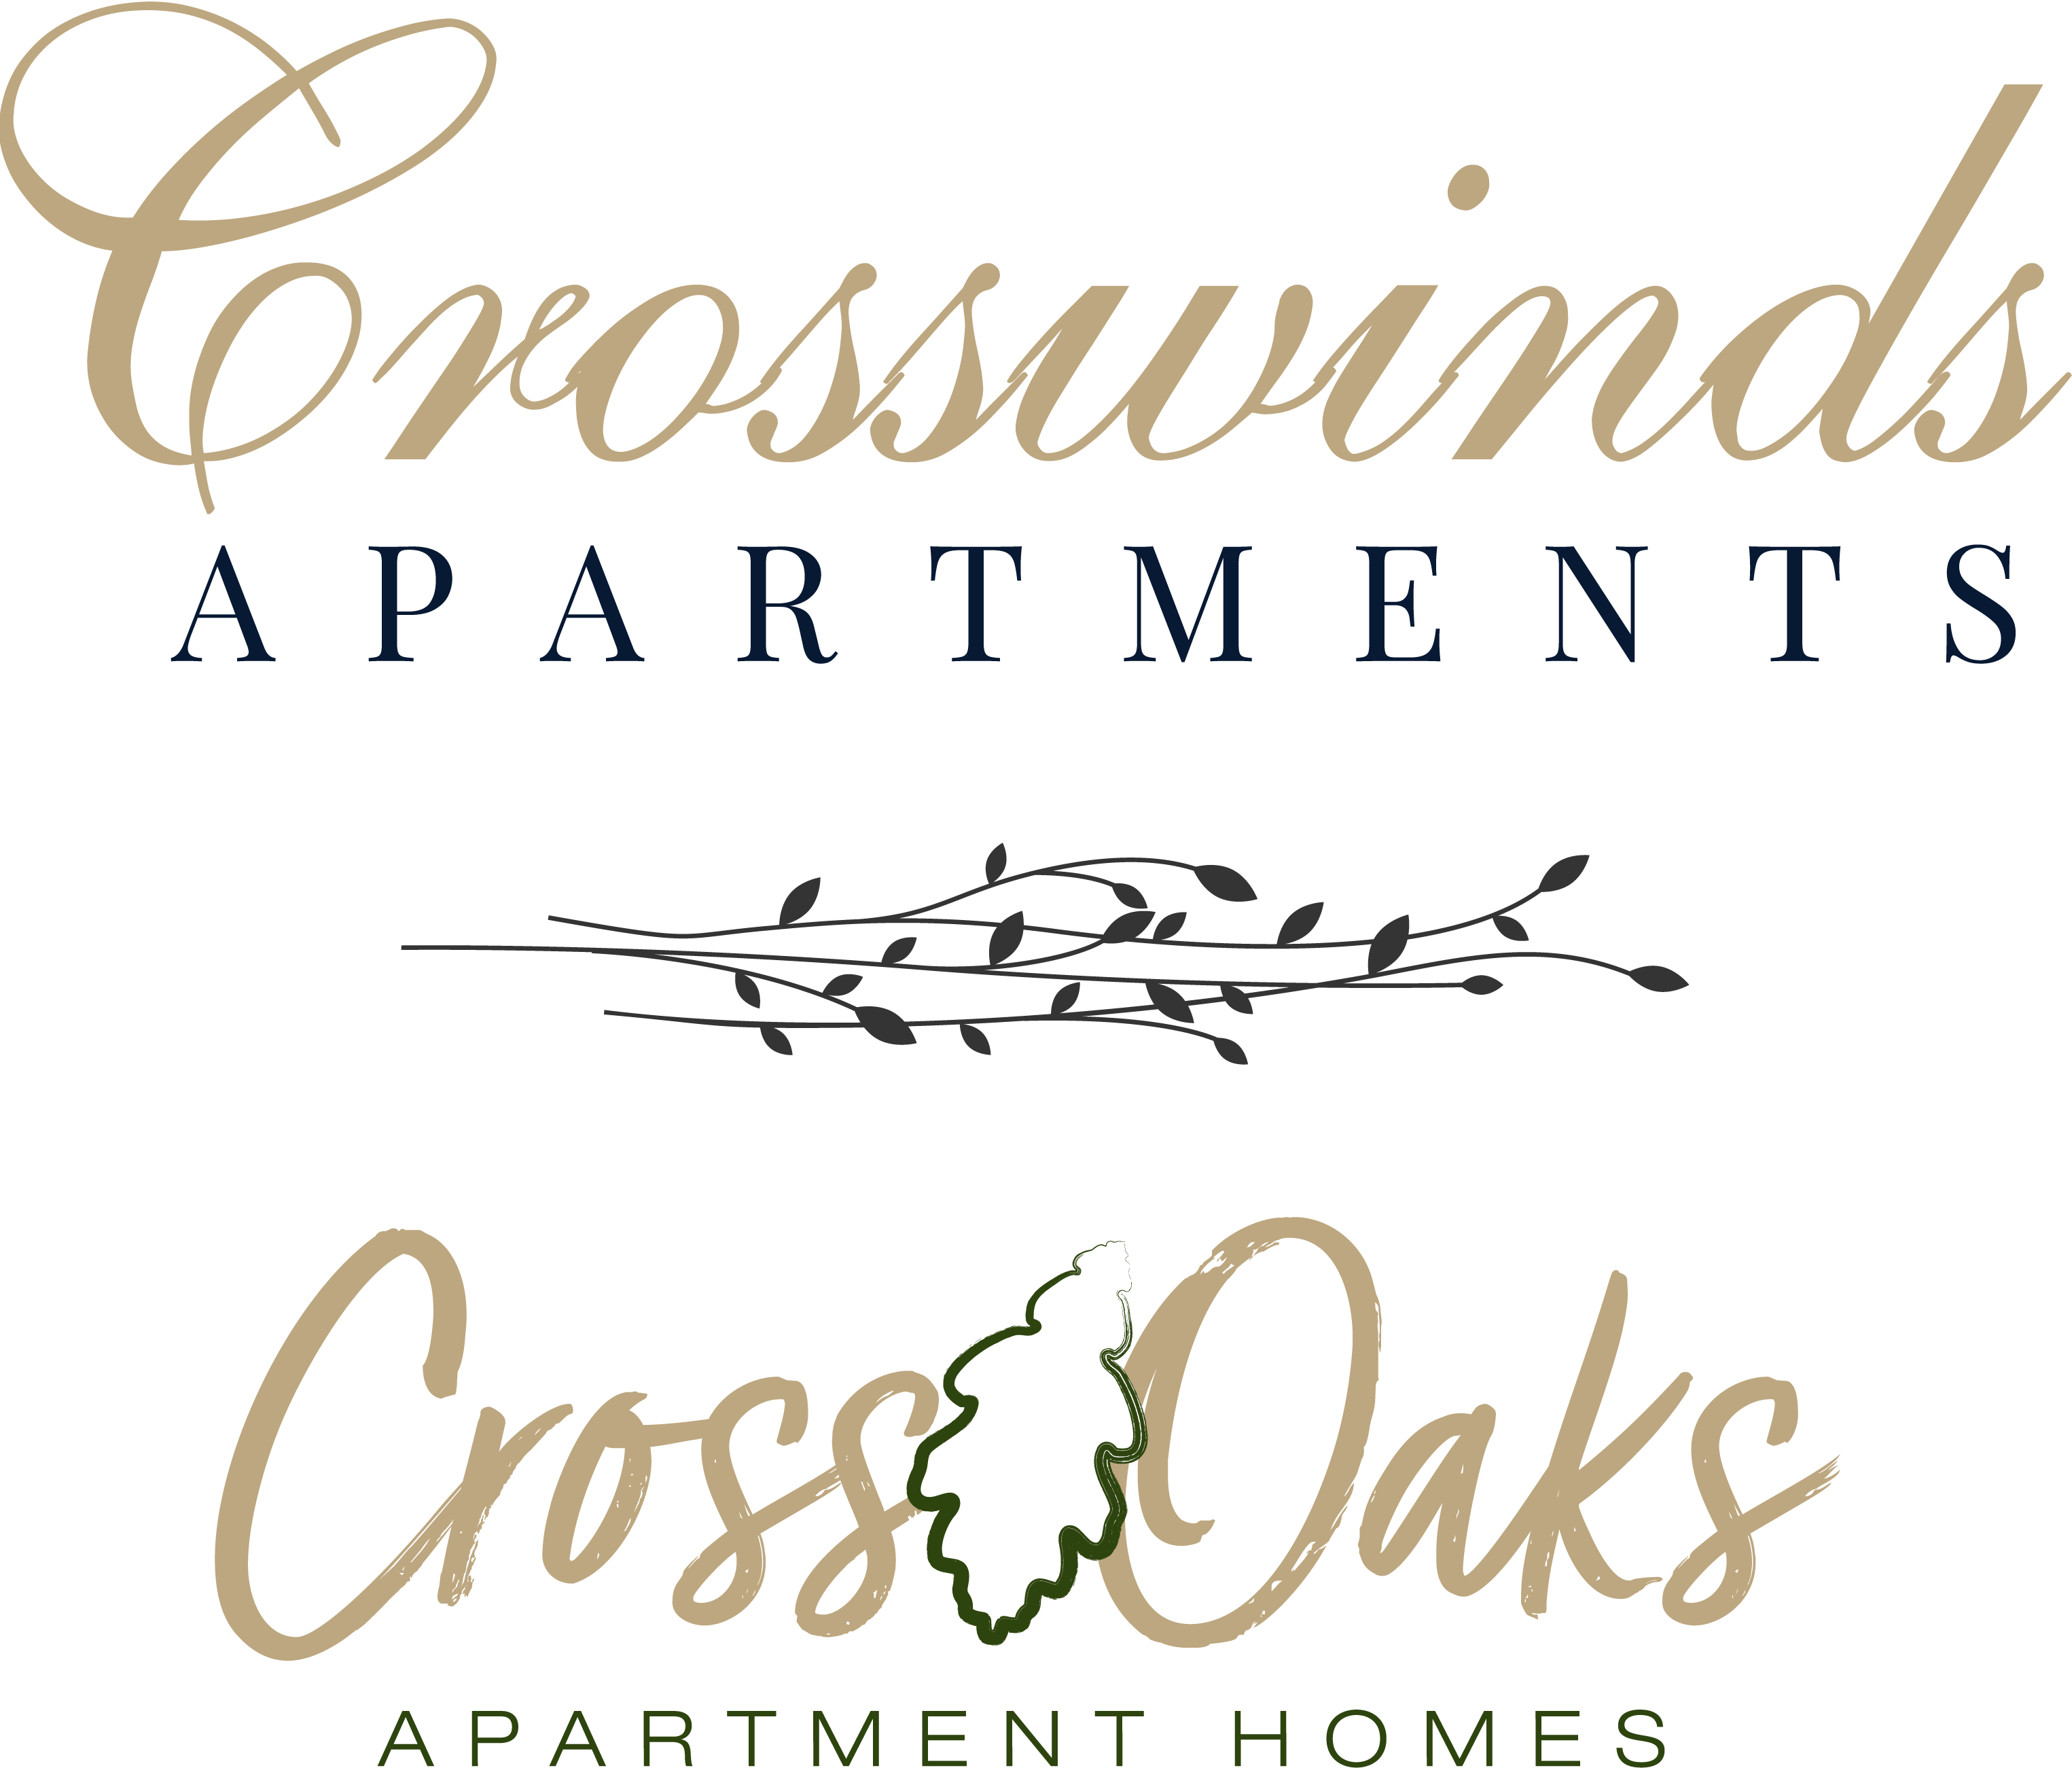 Crosswinds Apartments